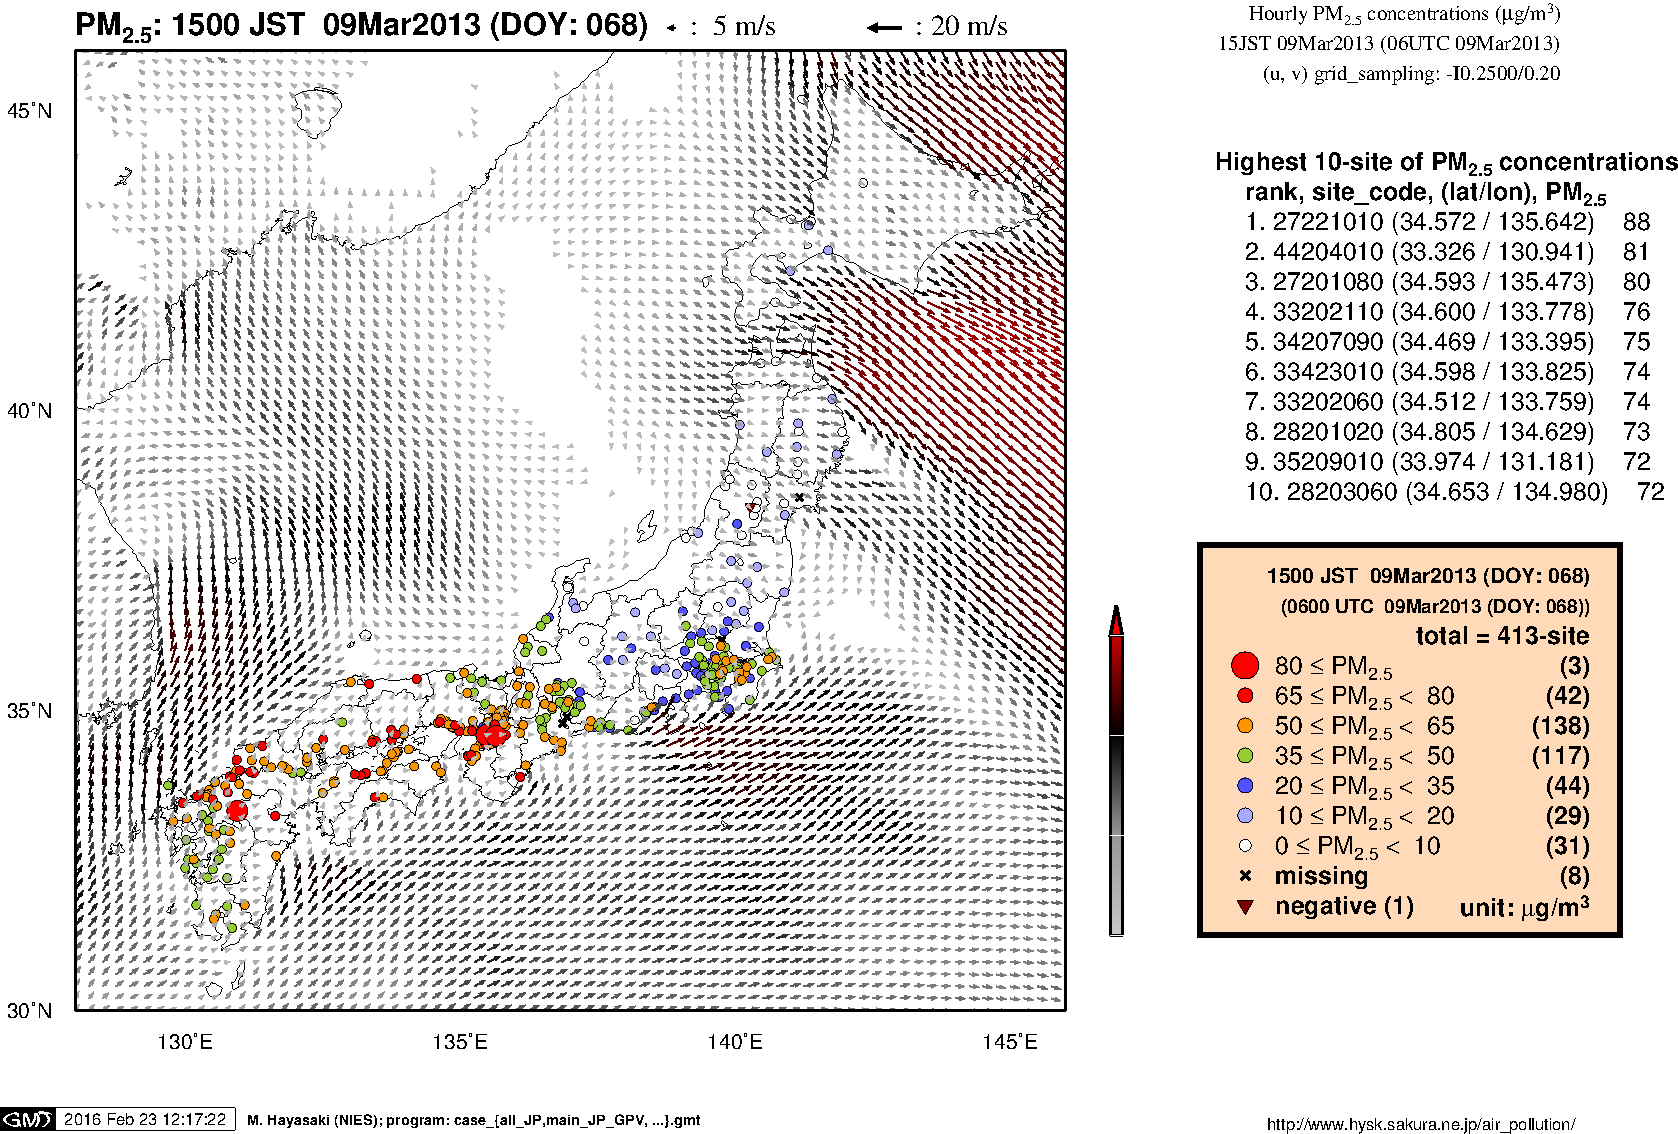 PM2.5 concentration in western Japan (15JST 09Mar2013)